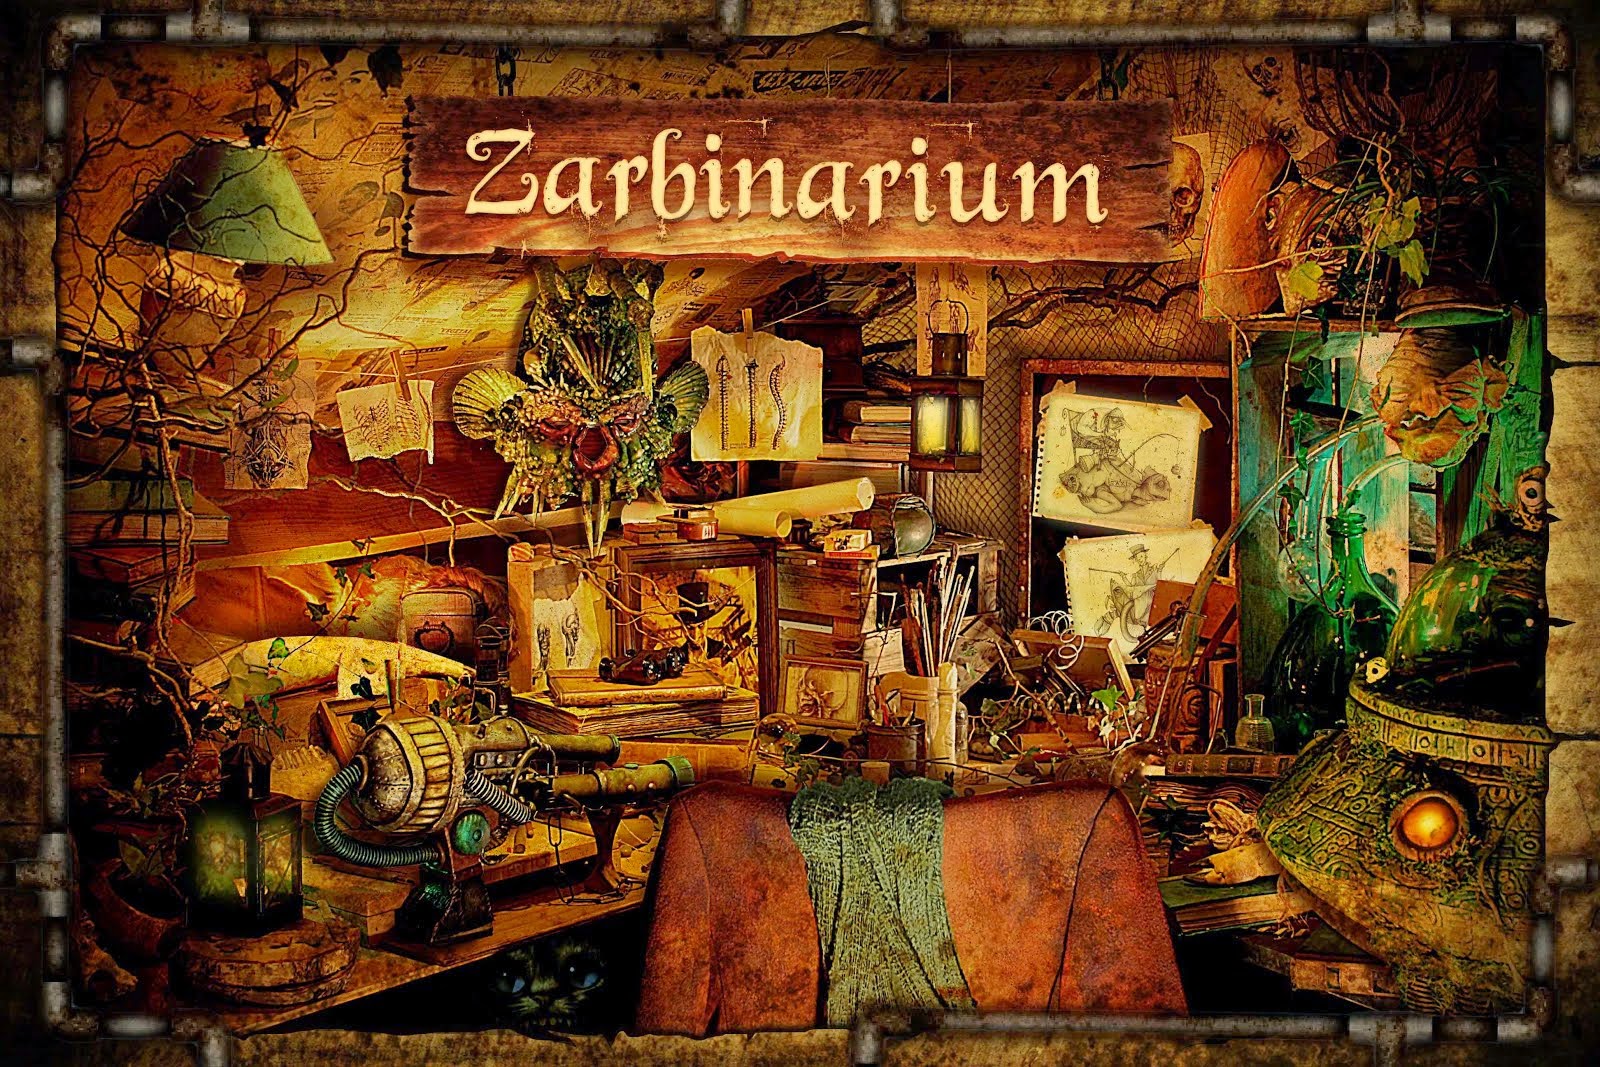 Zarbinarium